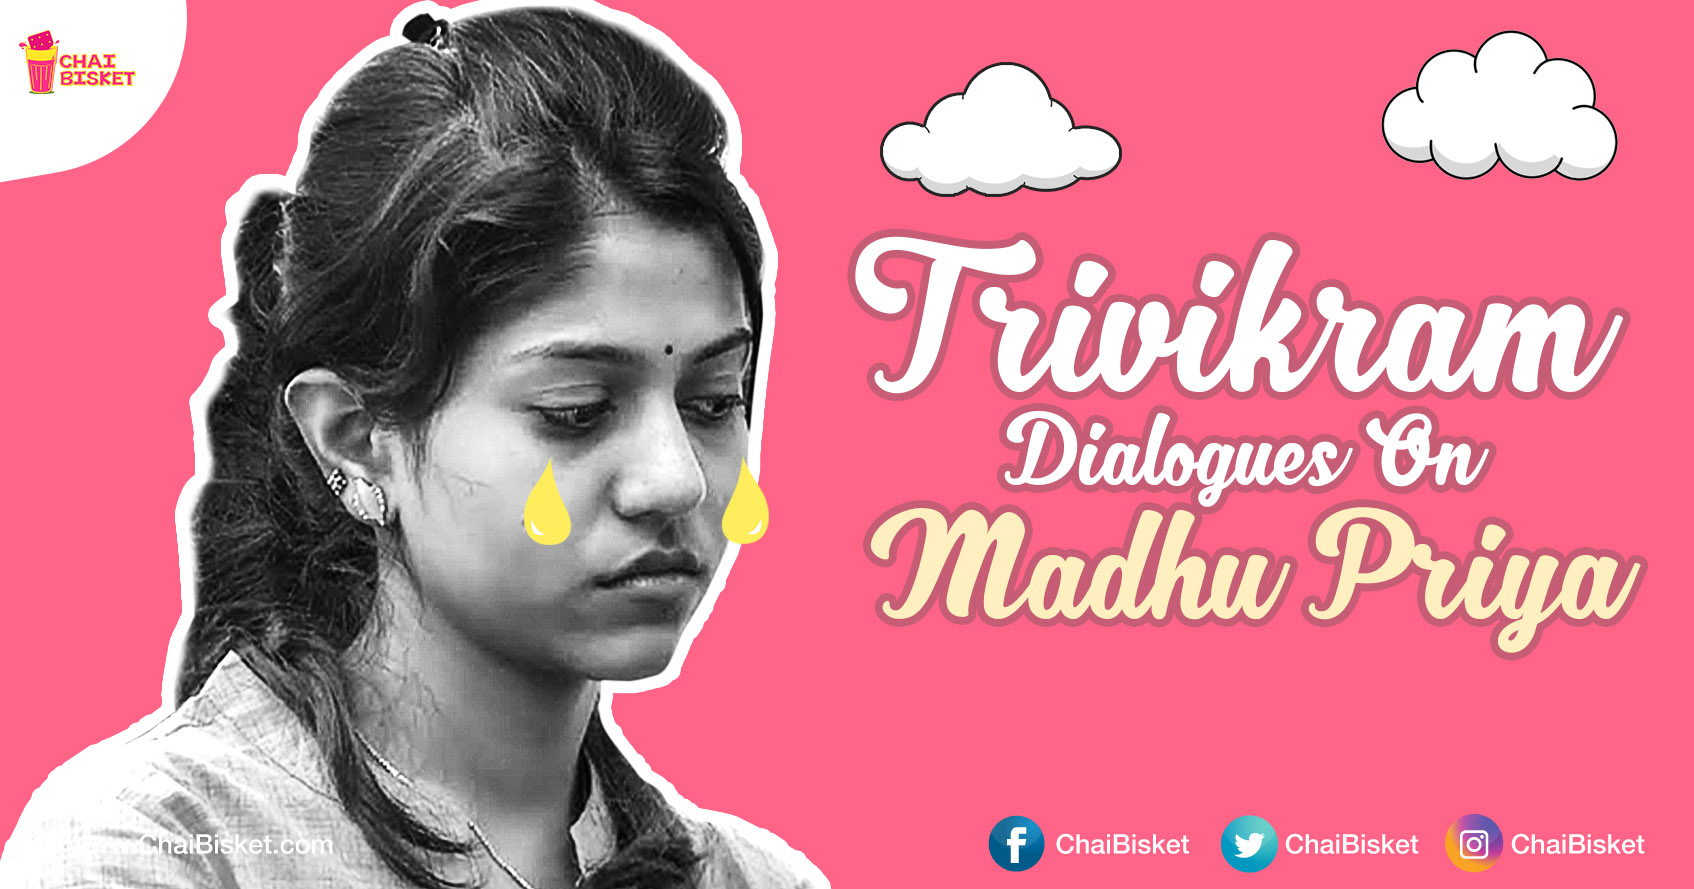 Telugu Sex Madhu Priya - What If... Director Trivikram Dialogues Were Used For Bigg Boss Contestant Madhu  Priya! - Chai Bisket